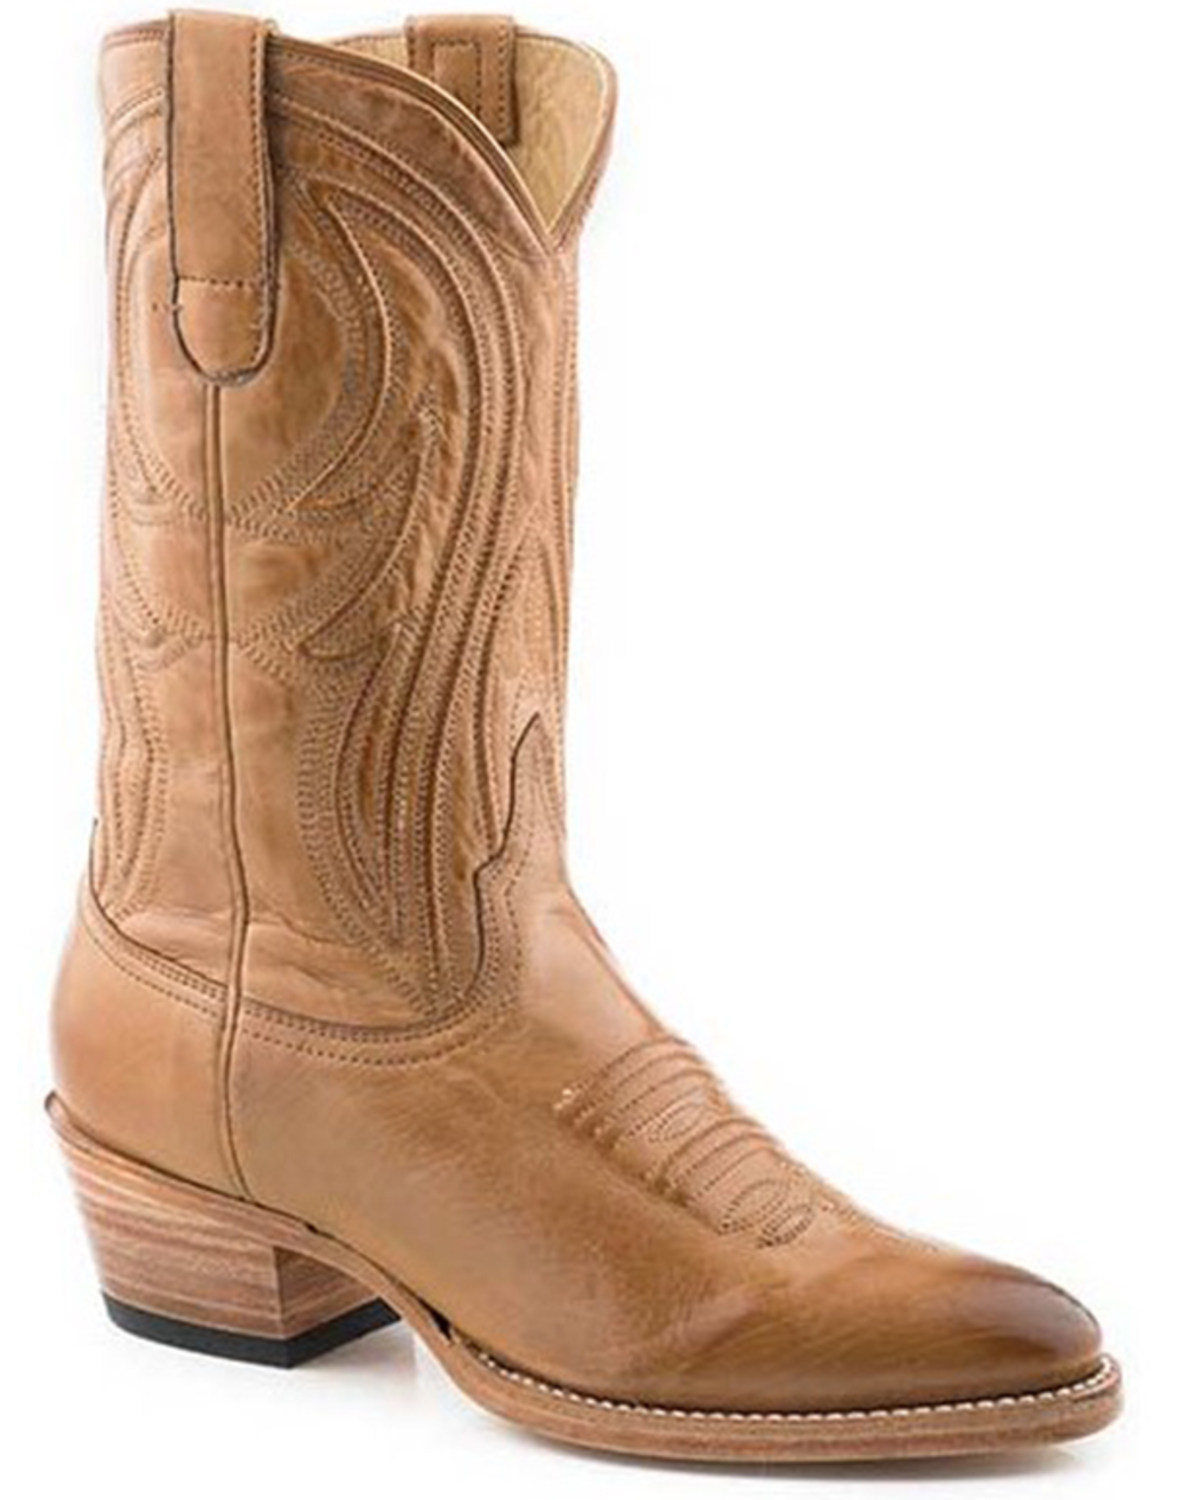 Stetson Women's Nora Western Boots - Round Toe